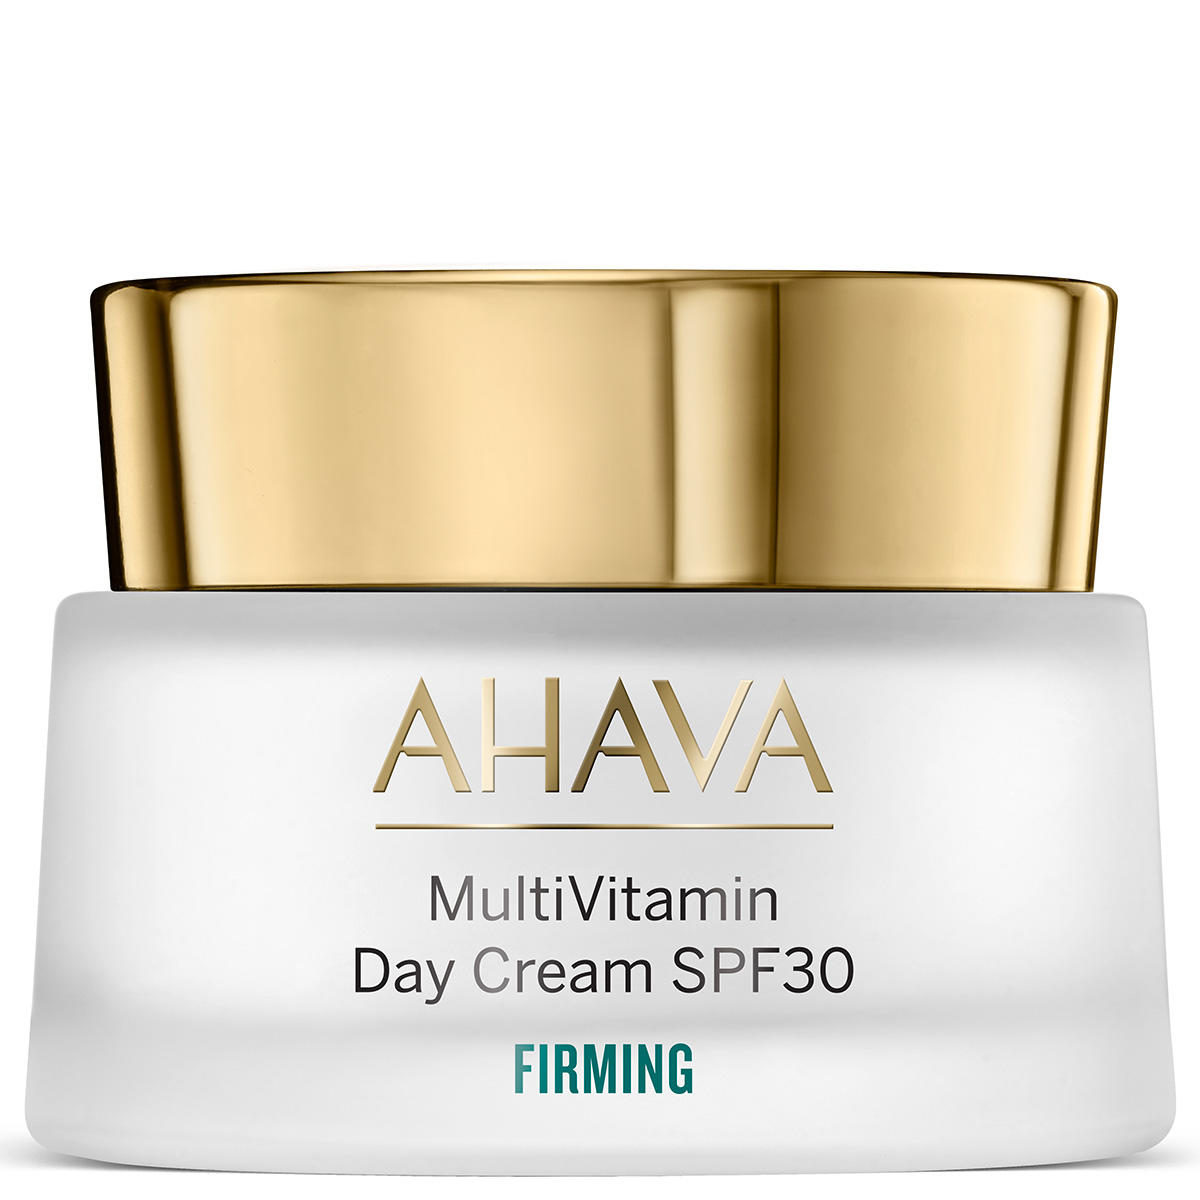 AHAVA MultiVitamin Day Cream SPF 30 50 ml - 1